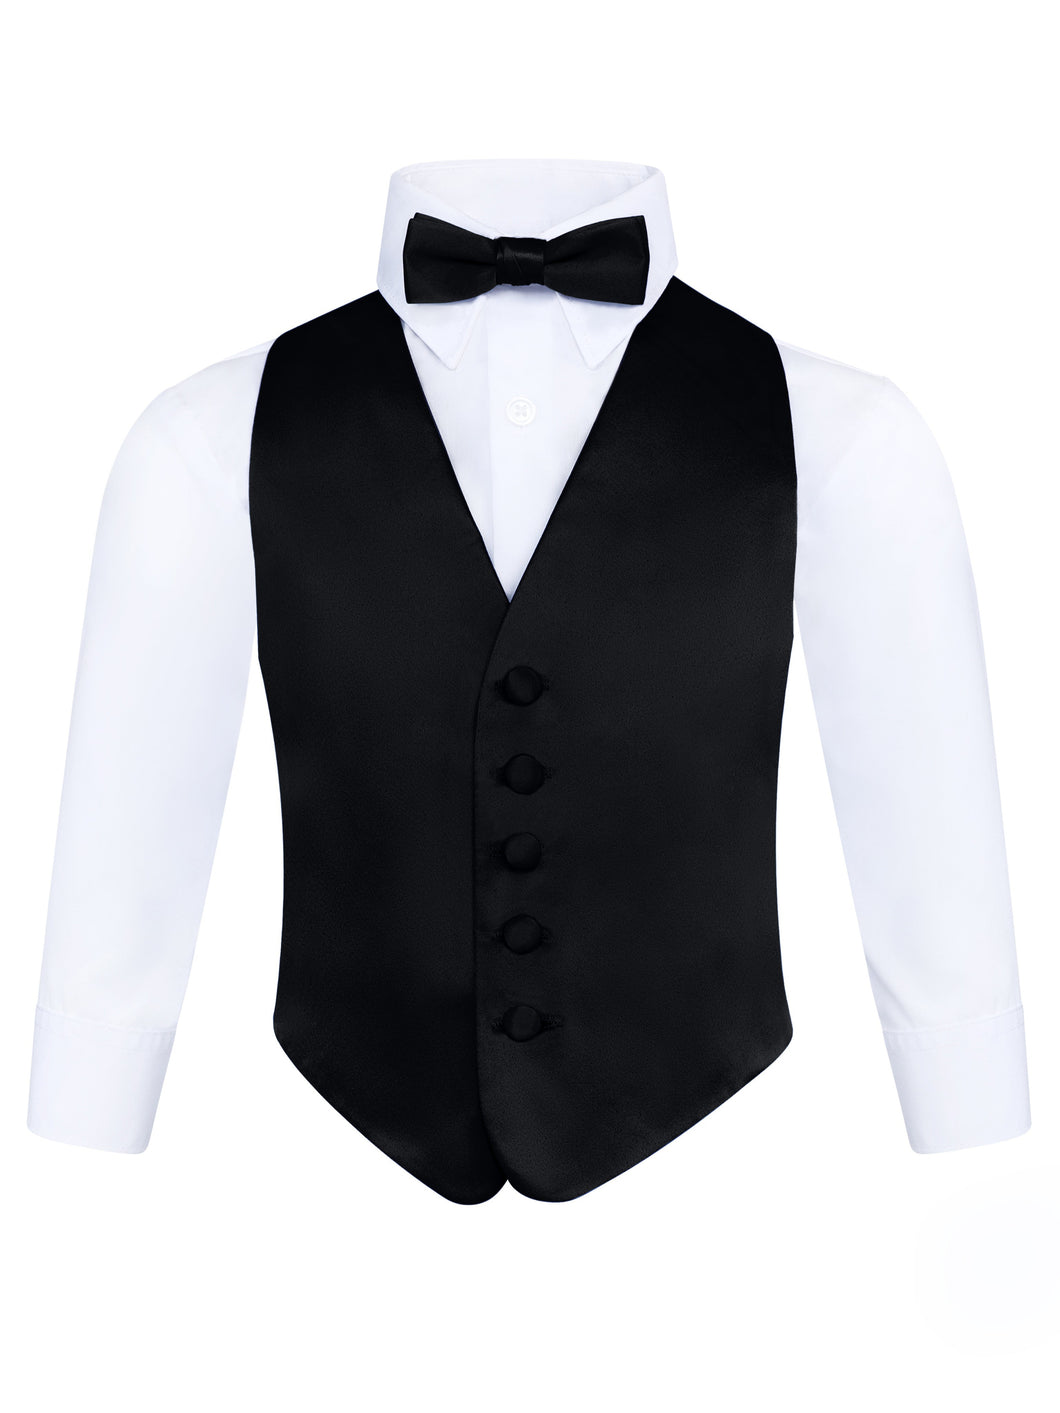 S.H. Churchill & Co. Boy's 3 Piece Black Backless Formal Vest Set - Includes Vest, Bow Tie, Pocket Square for Tuxedo or Suit